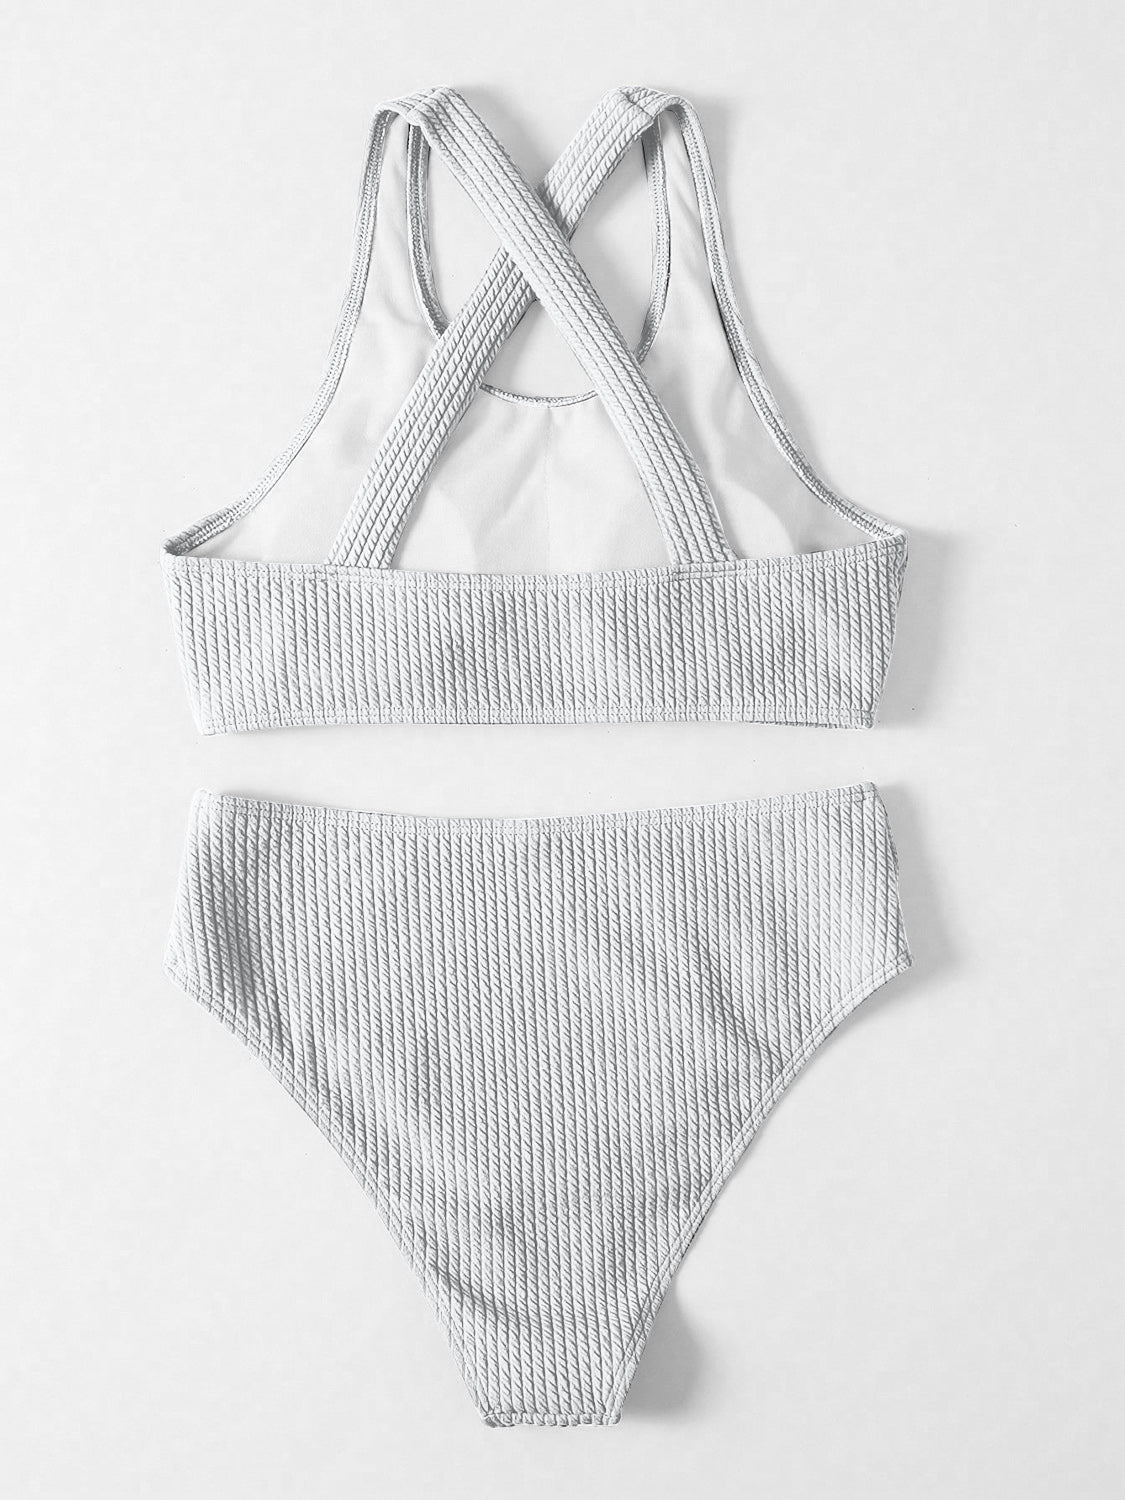 a white bikini top and bottom with straps